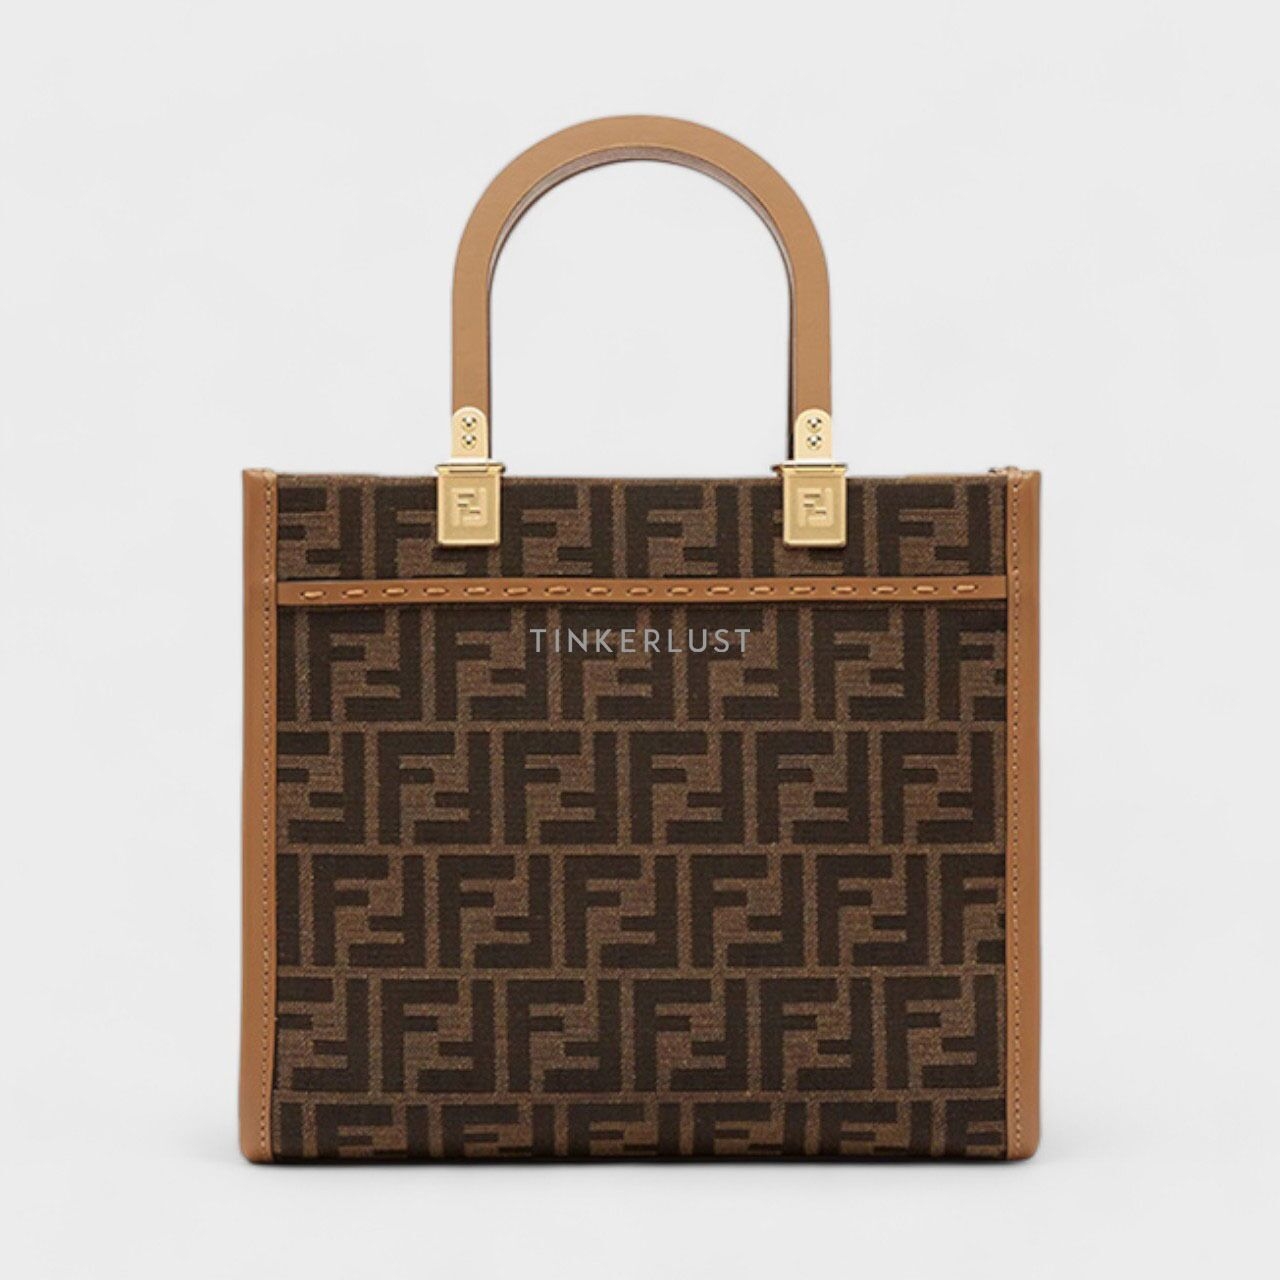 Fendi Small Sunshine Fendi Roma Shopper Bag in Brown/Sand Fabric with Jacquard FF Motif